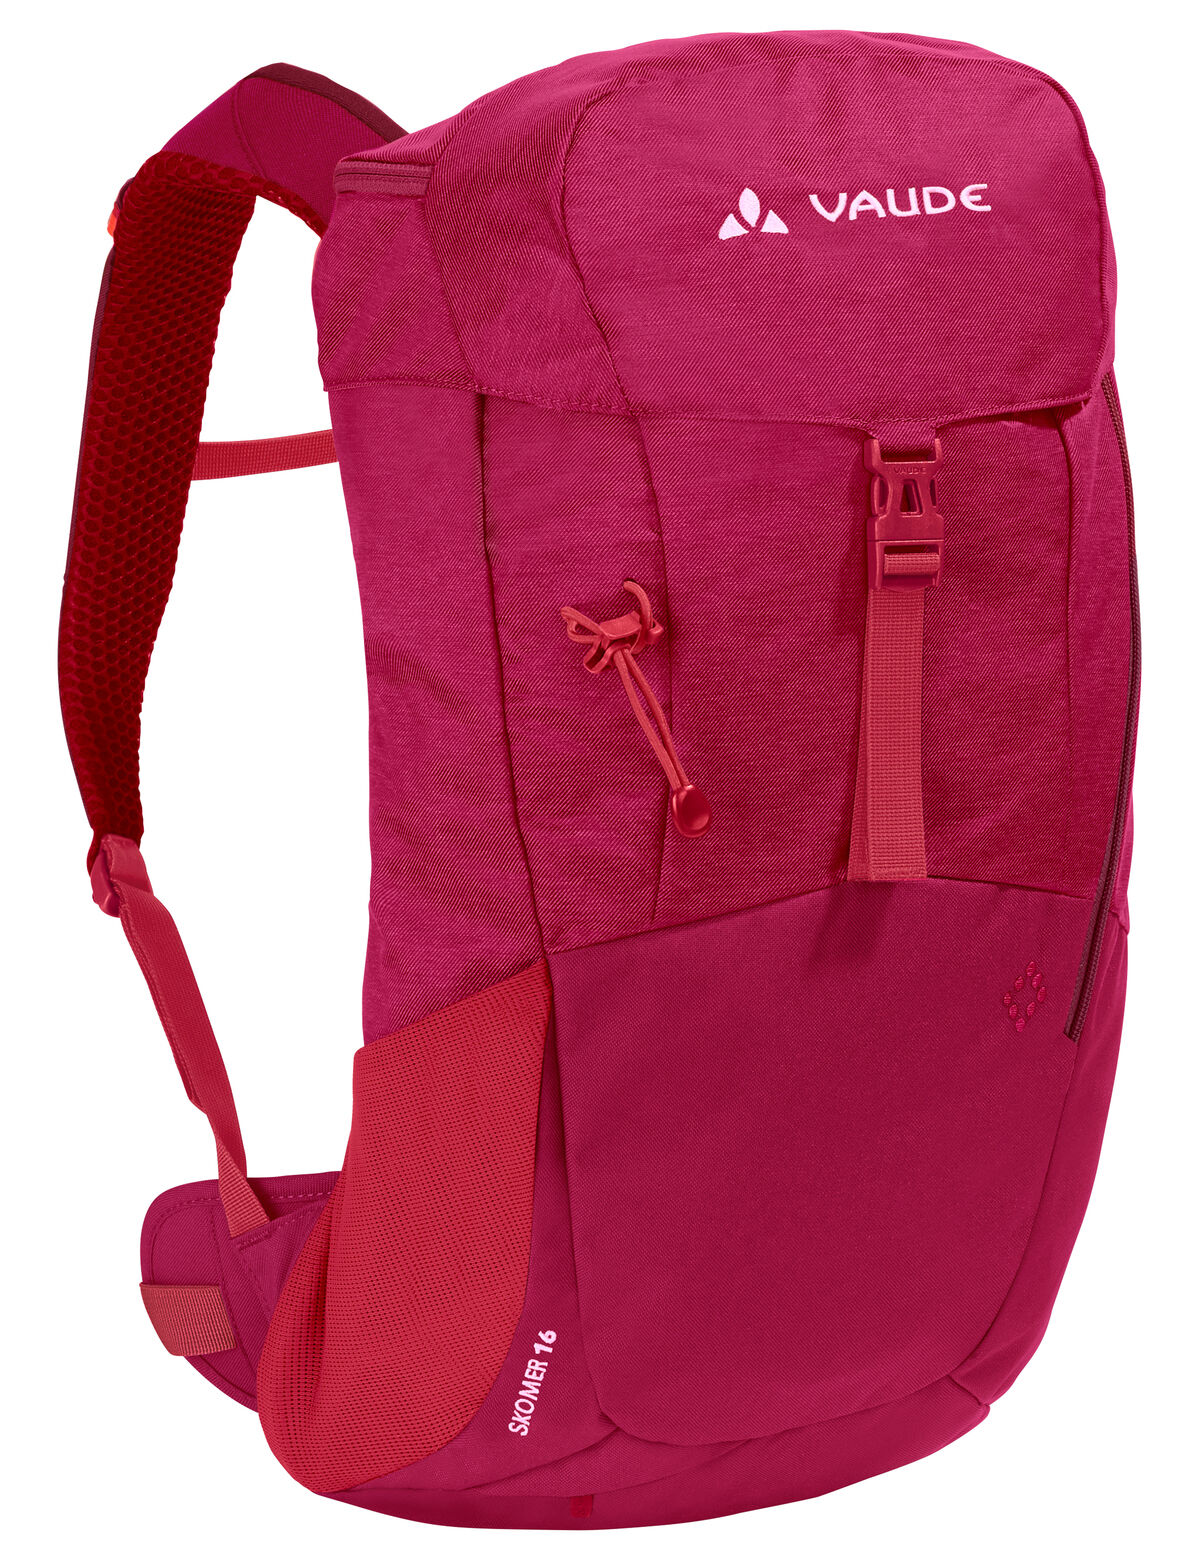 Vaude - Skomer 16 - Hiking backpack - Women's